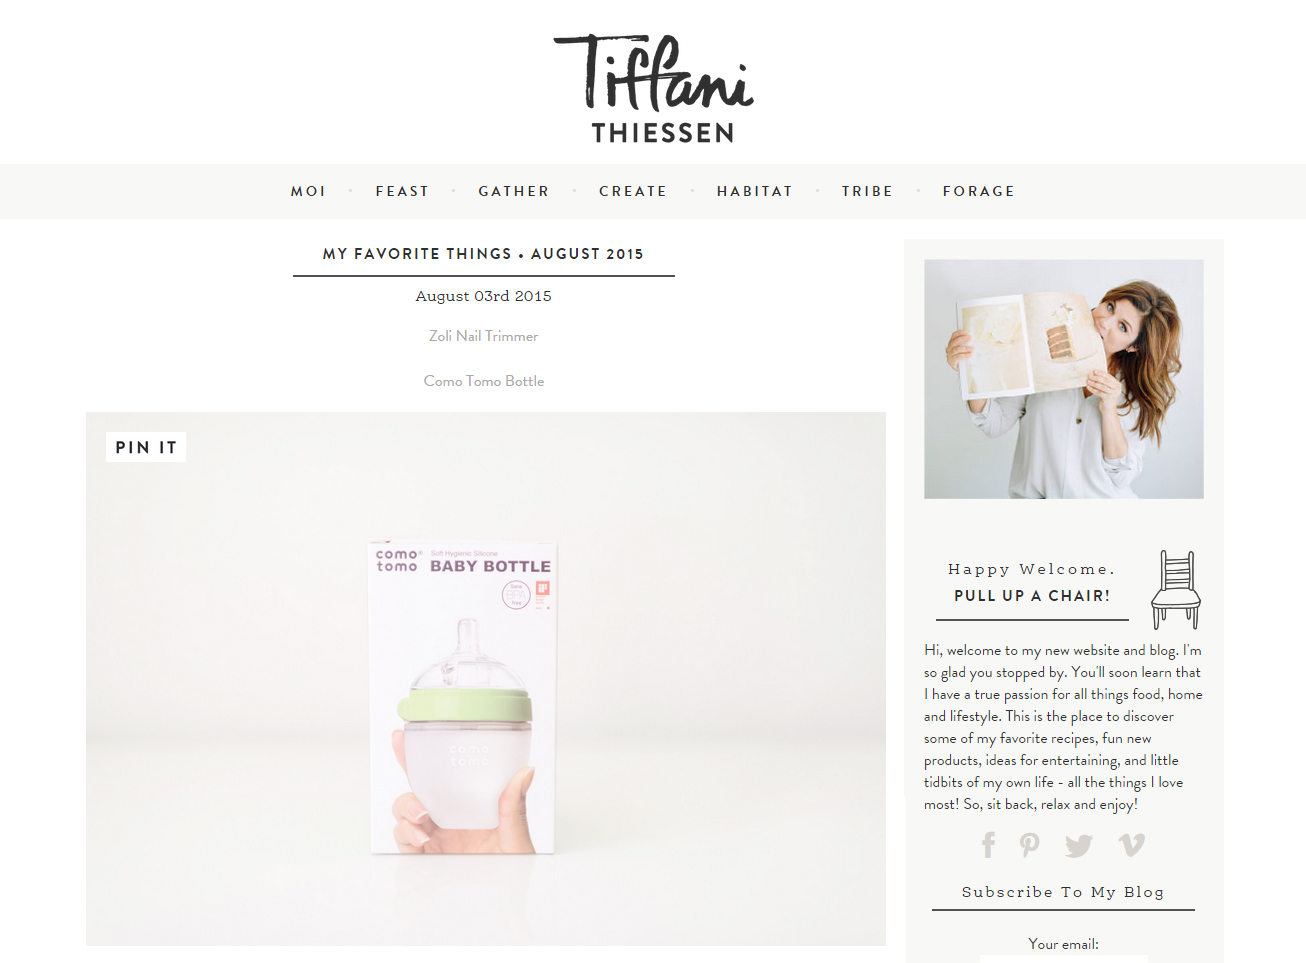 Tiffani Thiessen’s “Favorite Things” 코모토모